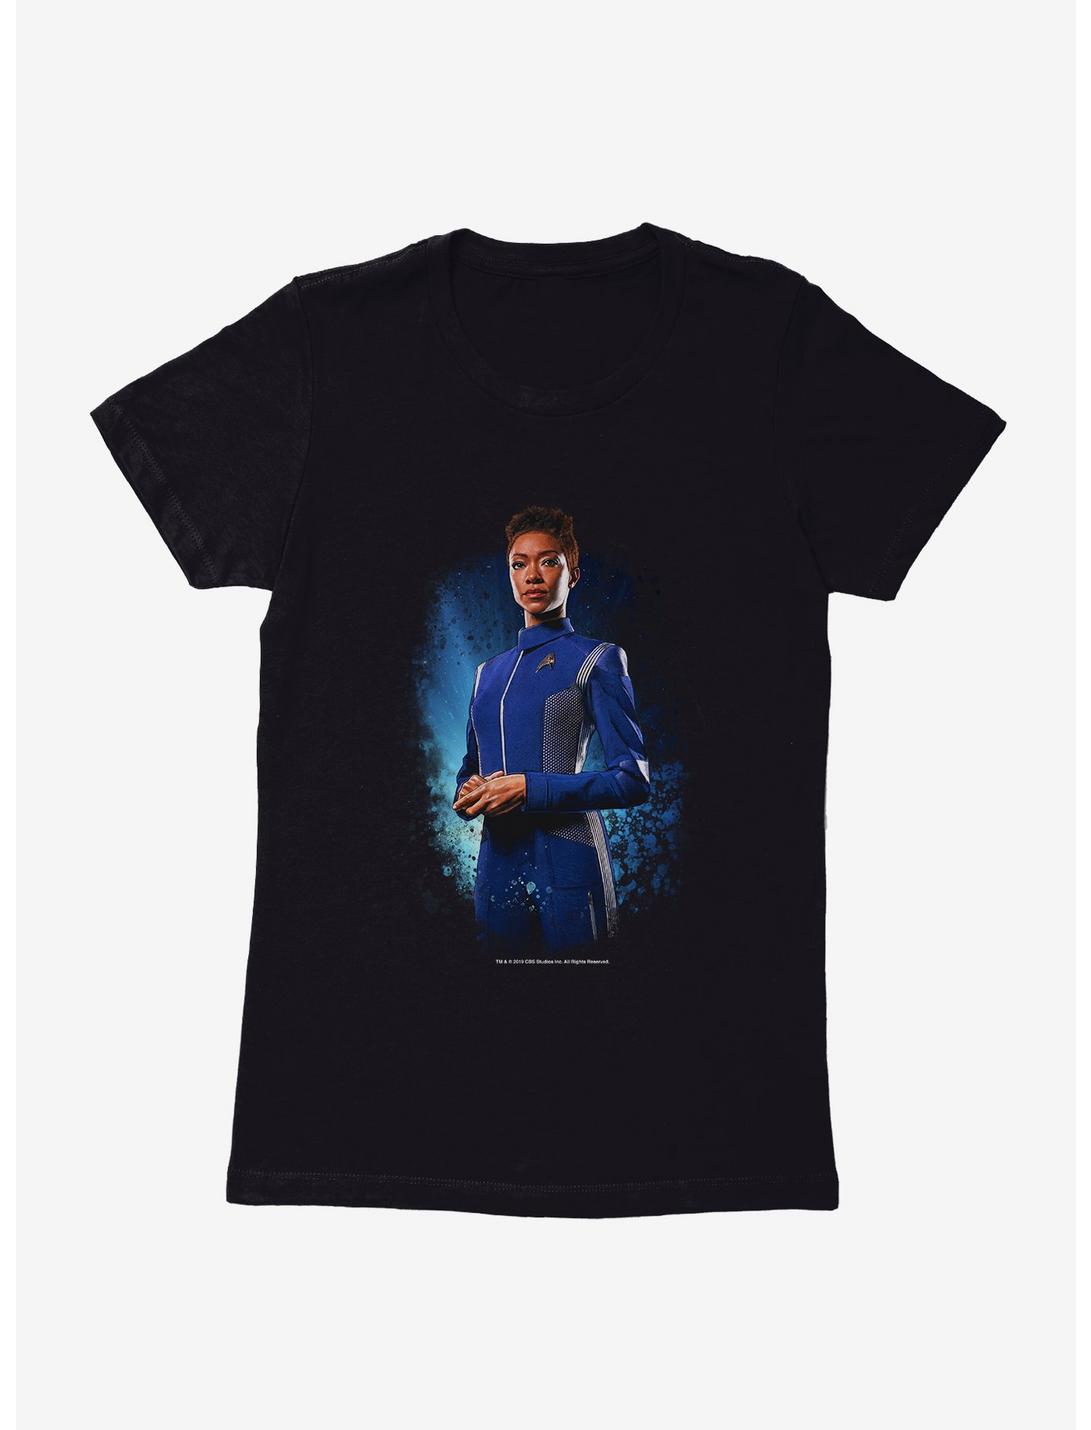 Star Trek Discovery Michael Burnham Womens T-Shirt, , hi-res